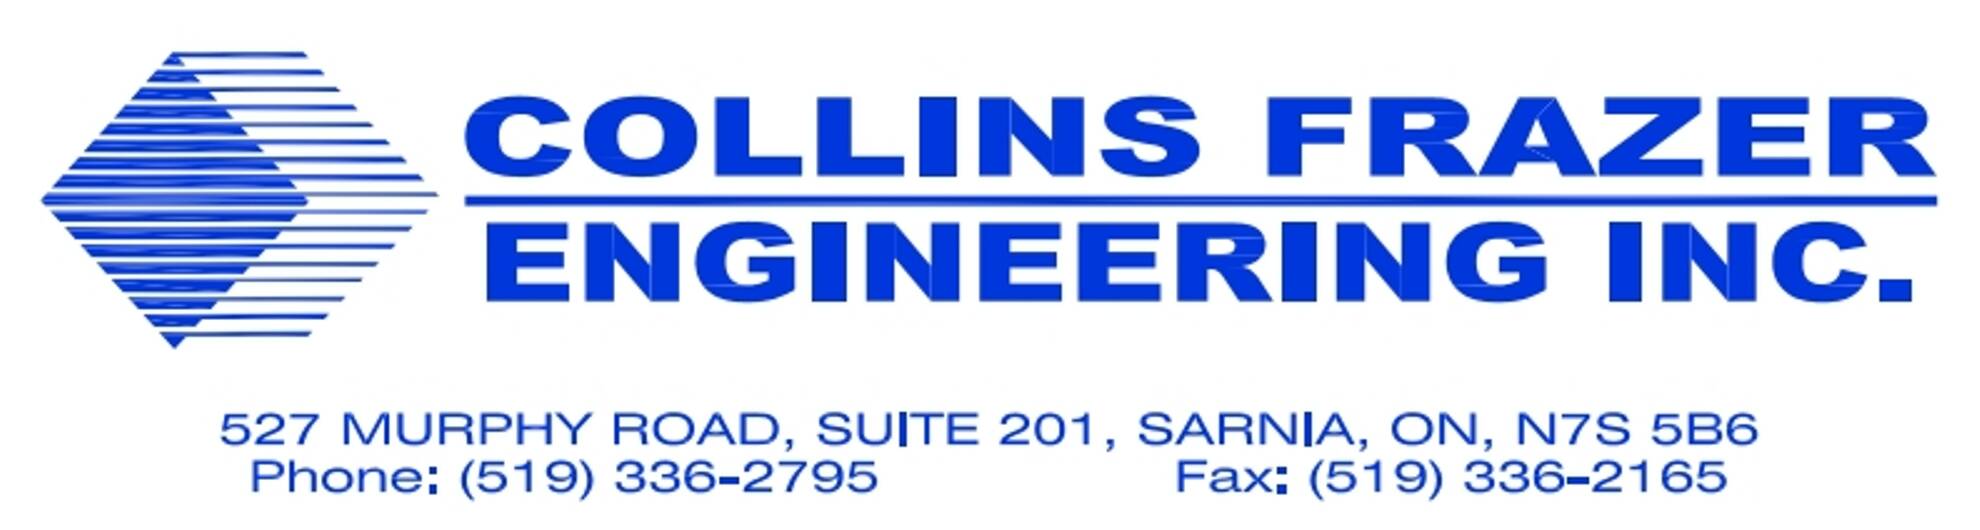  Collins Frazer Engineering Inc.